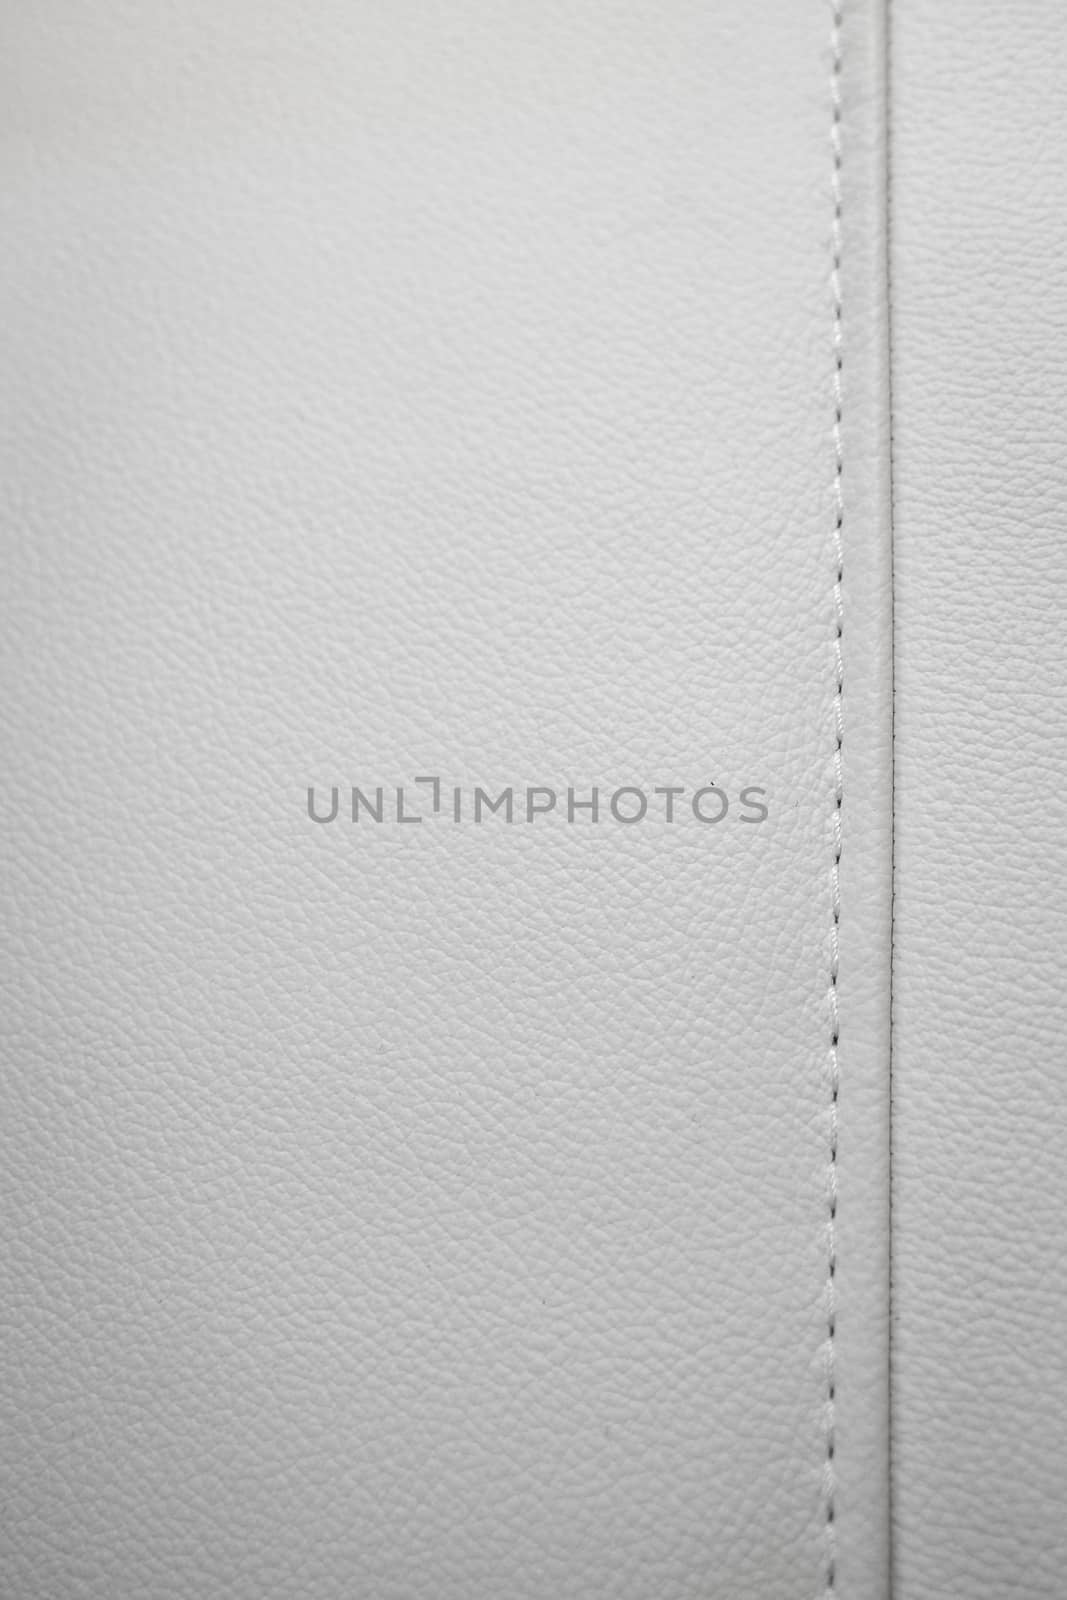 Luxury white leather background by wdnet_studio